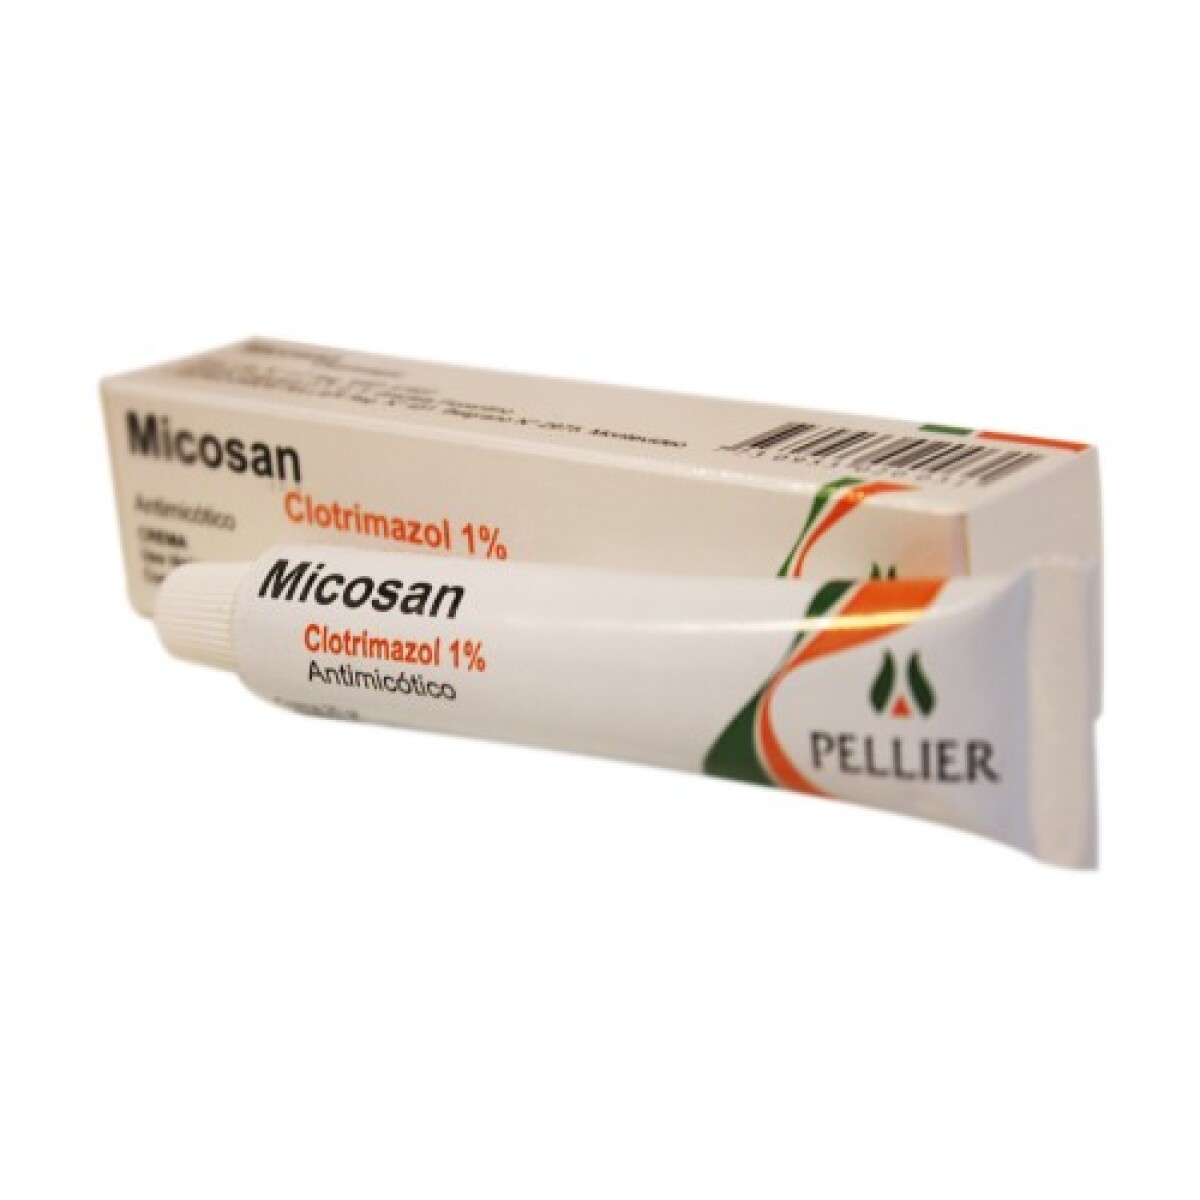 Micosan Crema 20 Gramos 